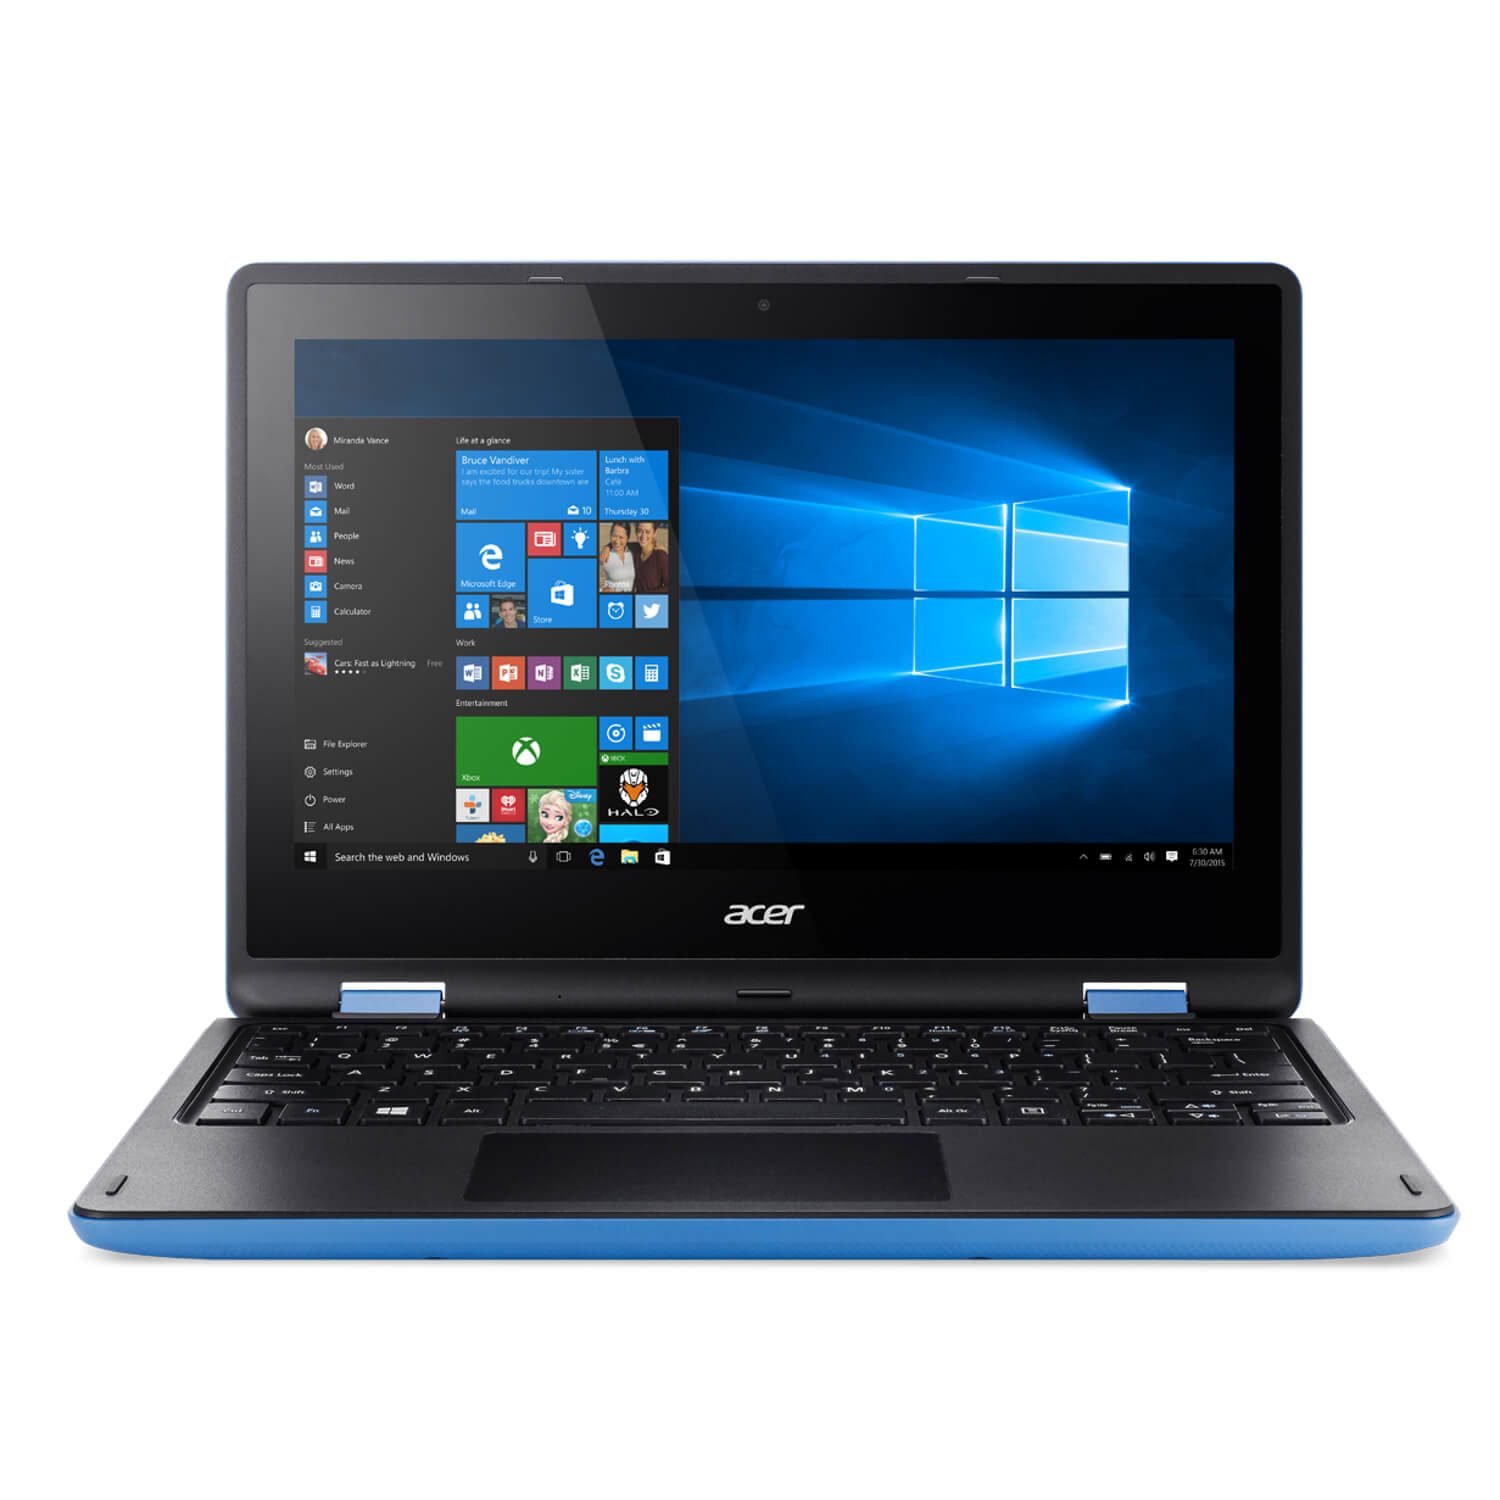  Laptop Acer 2 in 1 R3-131T-P0B7, Intel Pentium N3700, 4GB DDR3, HDD 500GB, Intel HD Graphics, Windows 10 Home 